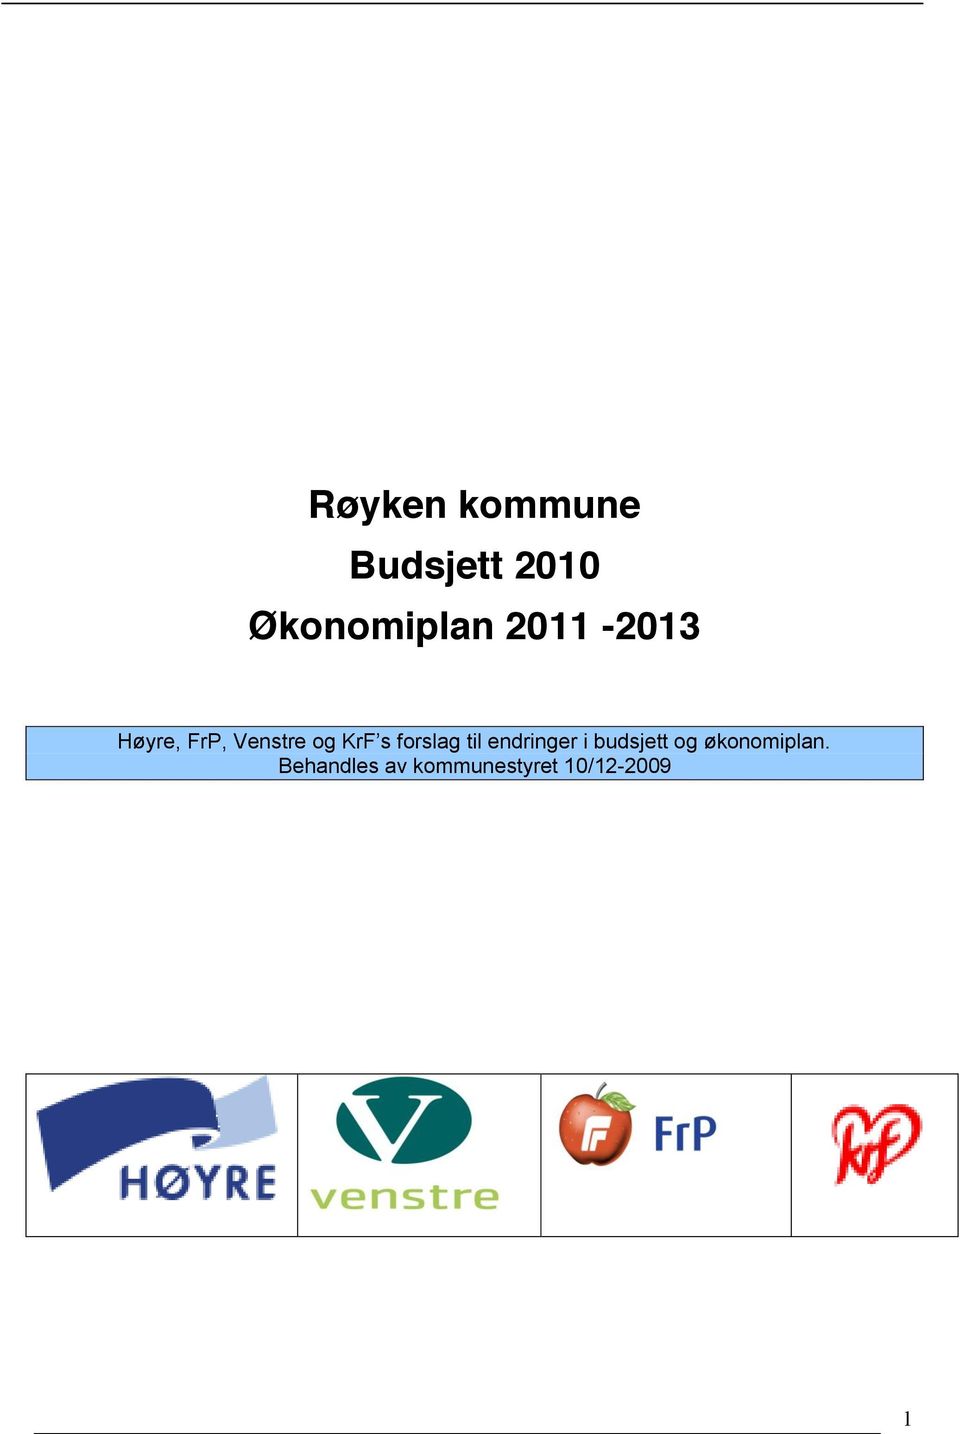 Økonomiplan 2011-2013